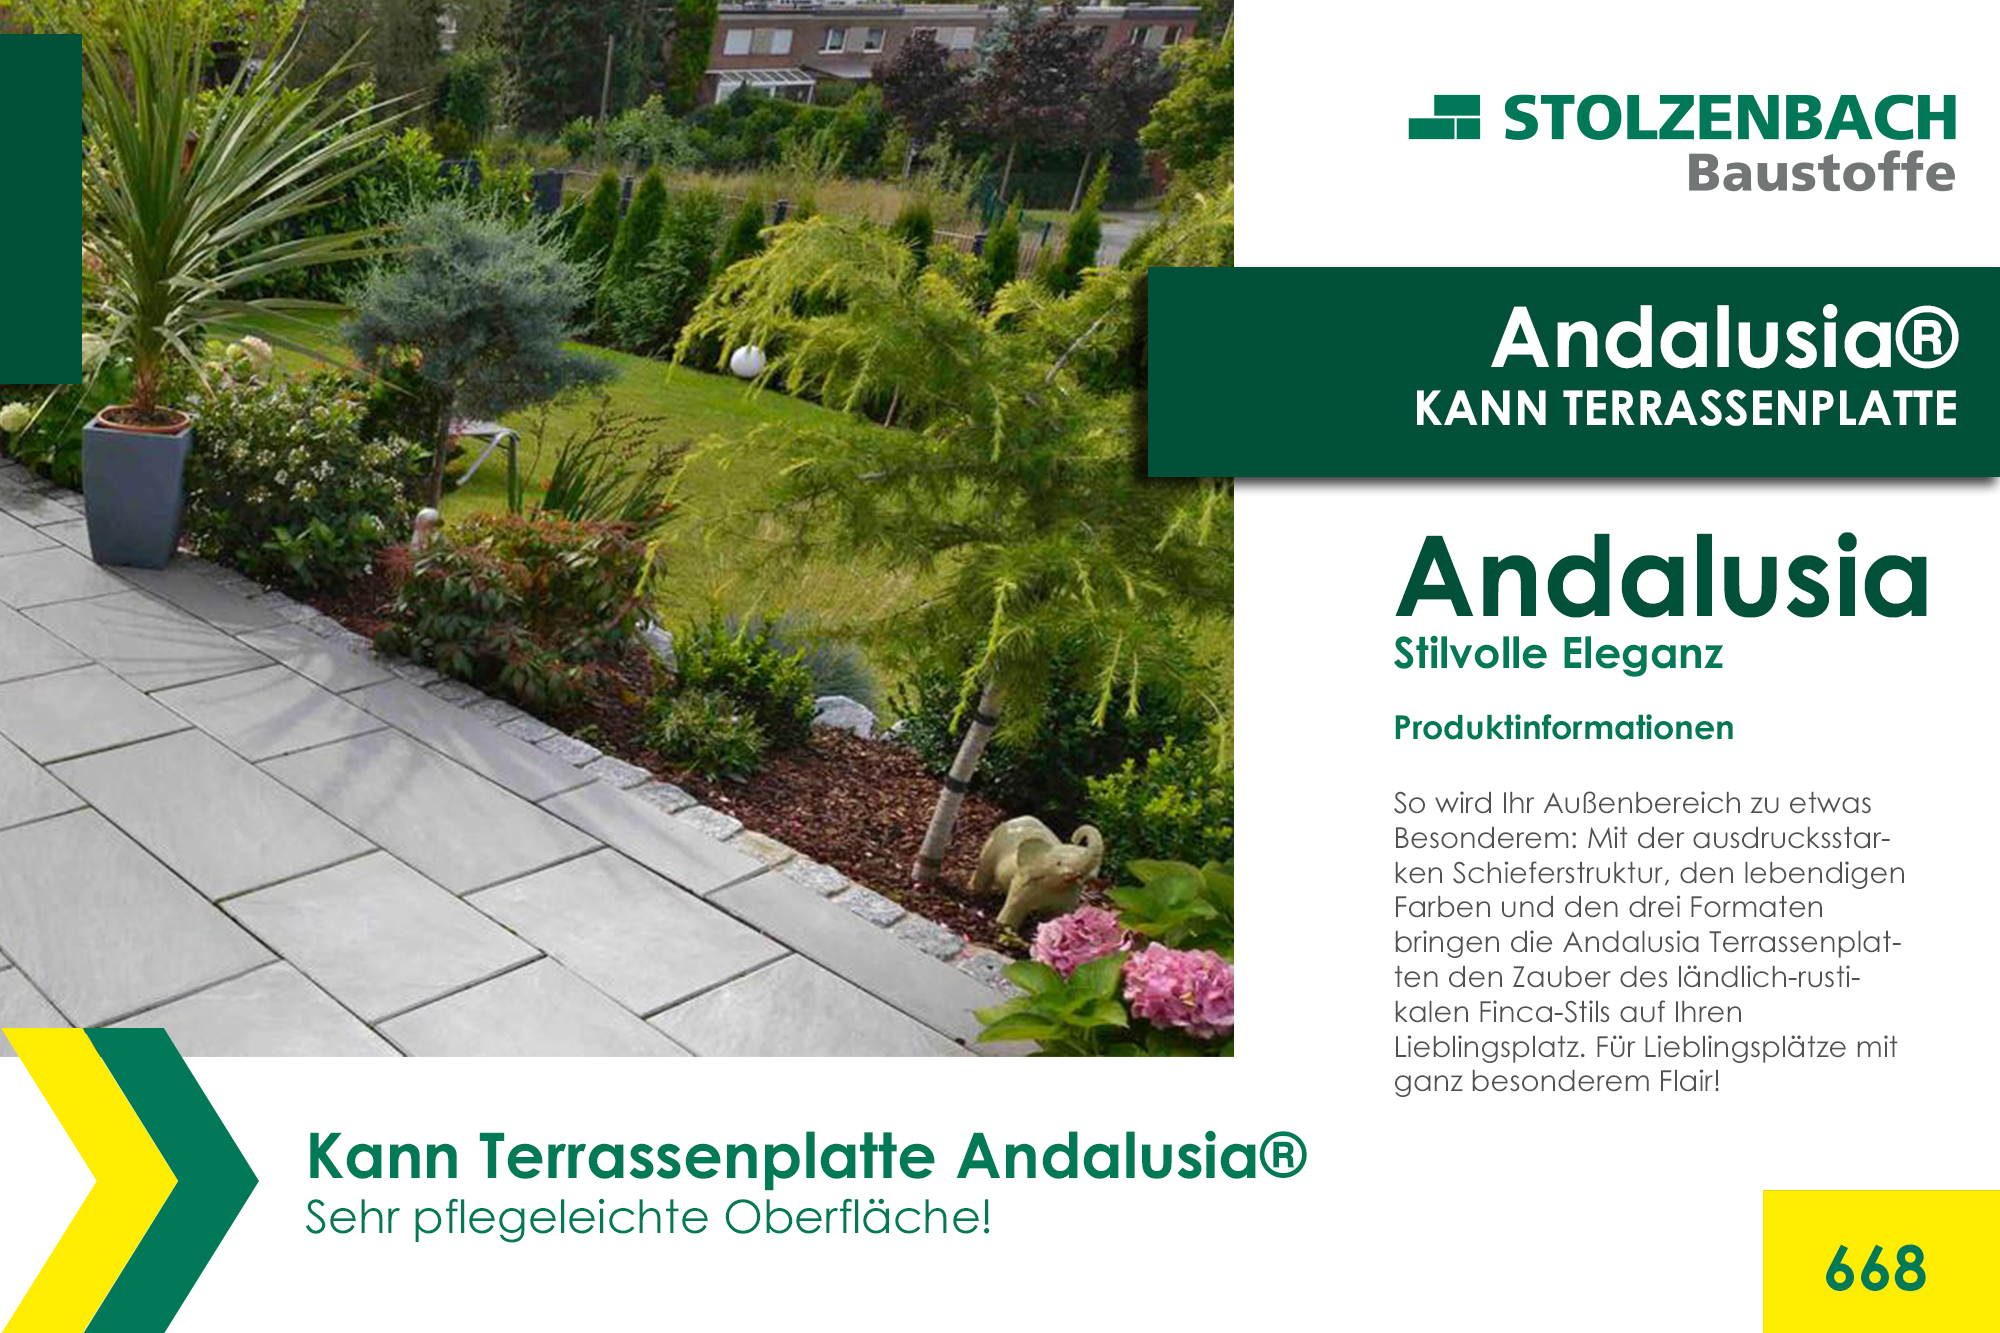 Kann Terrassenplatte Andalusia® in hellgrau